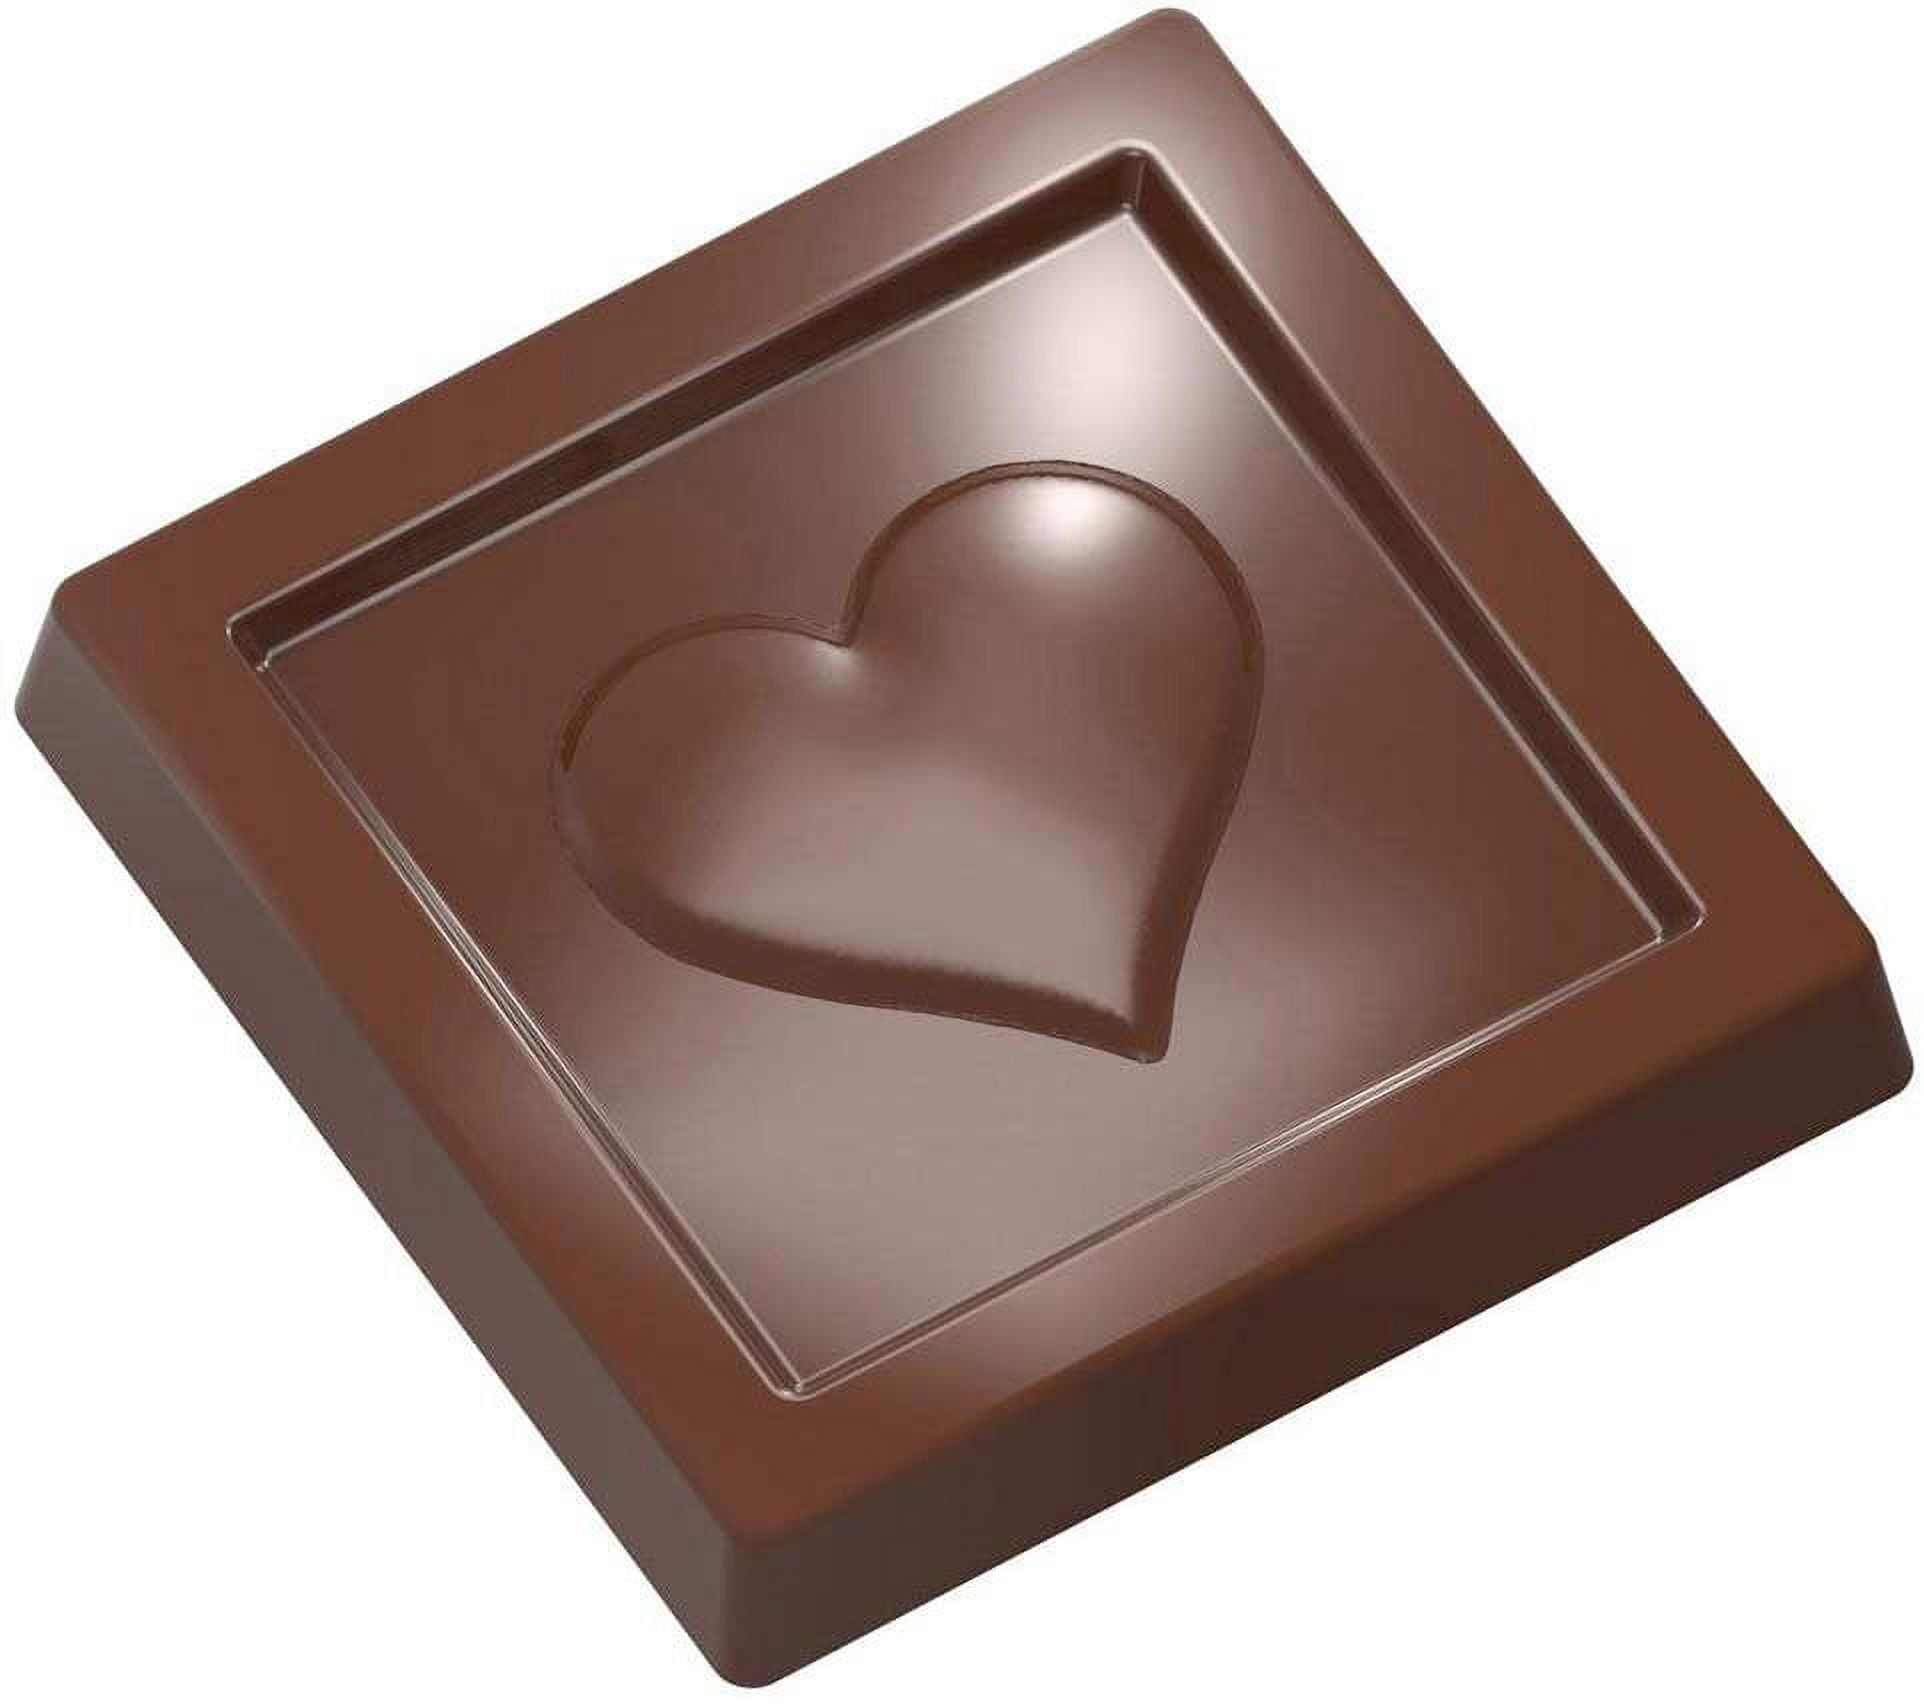 Chocolate World CW1146 Polycarbonate Glossy Heart Chocolate Mold 